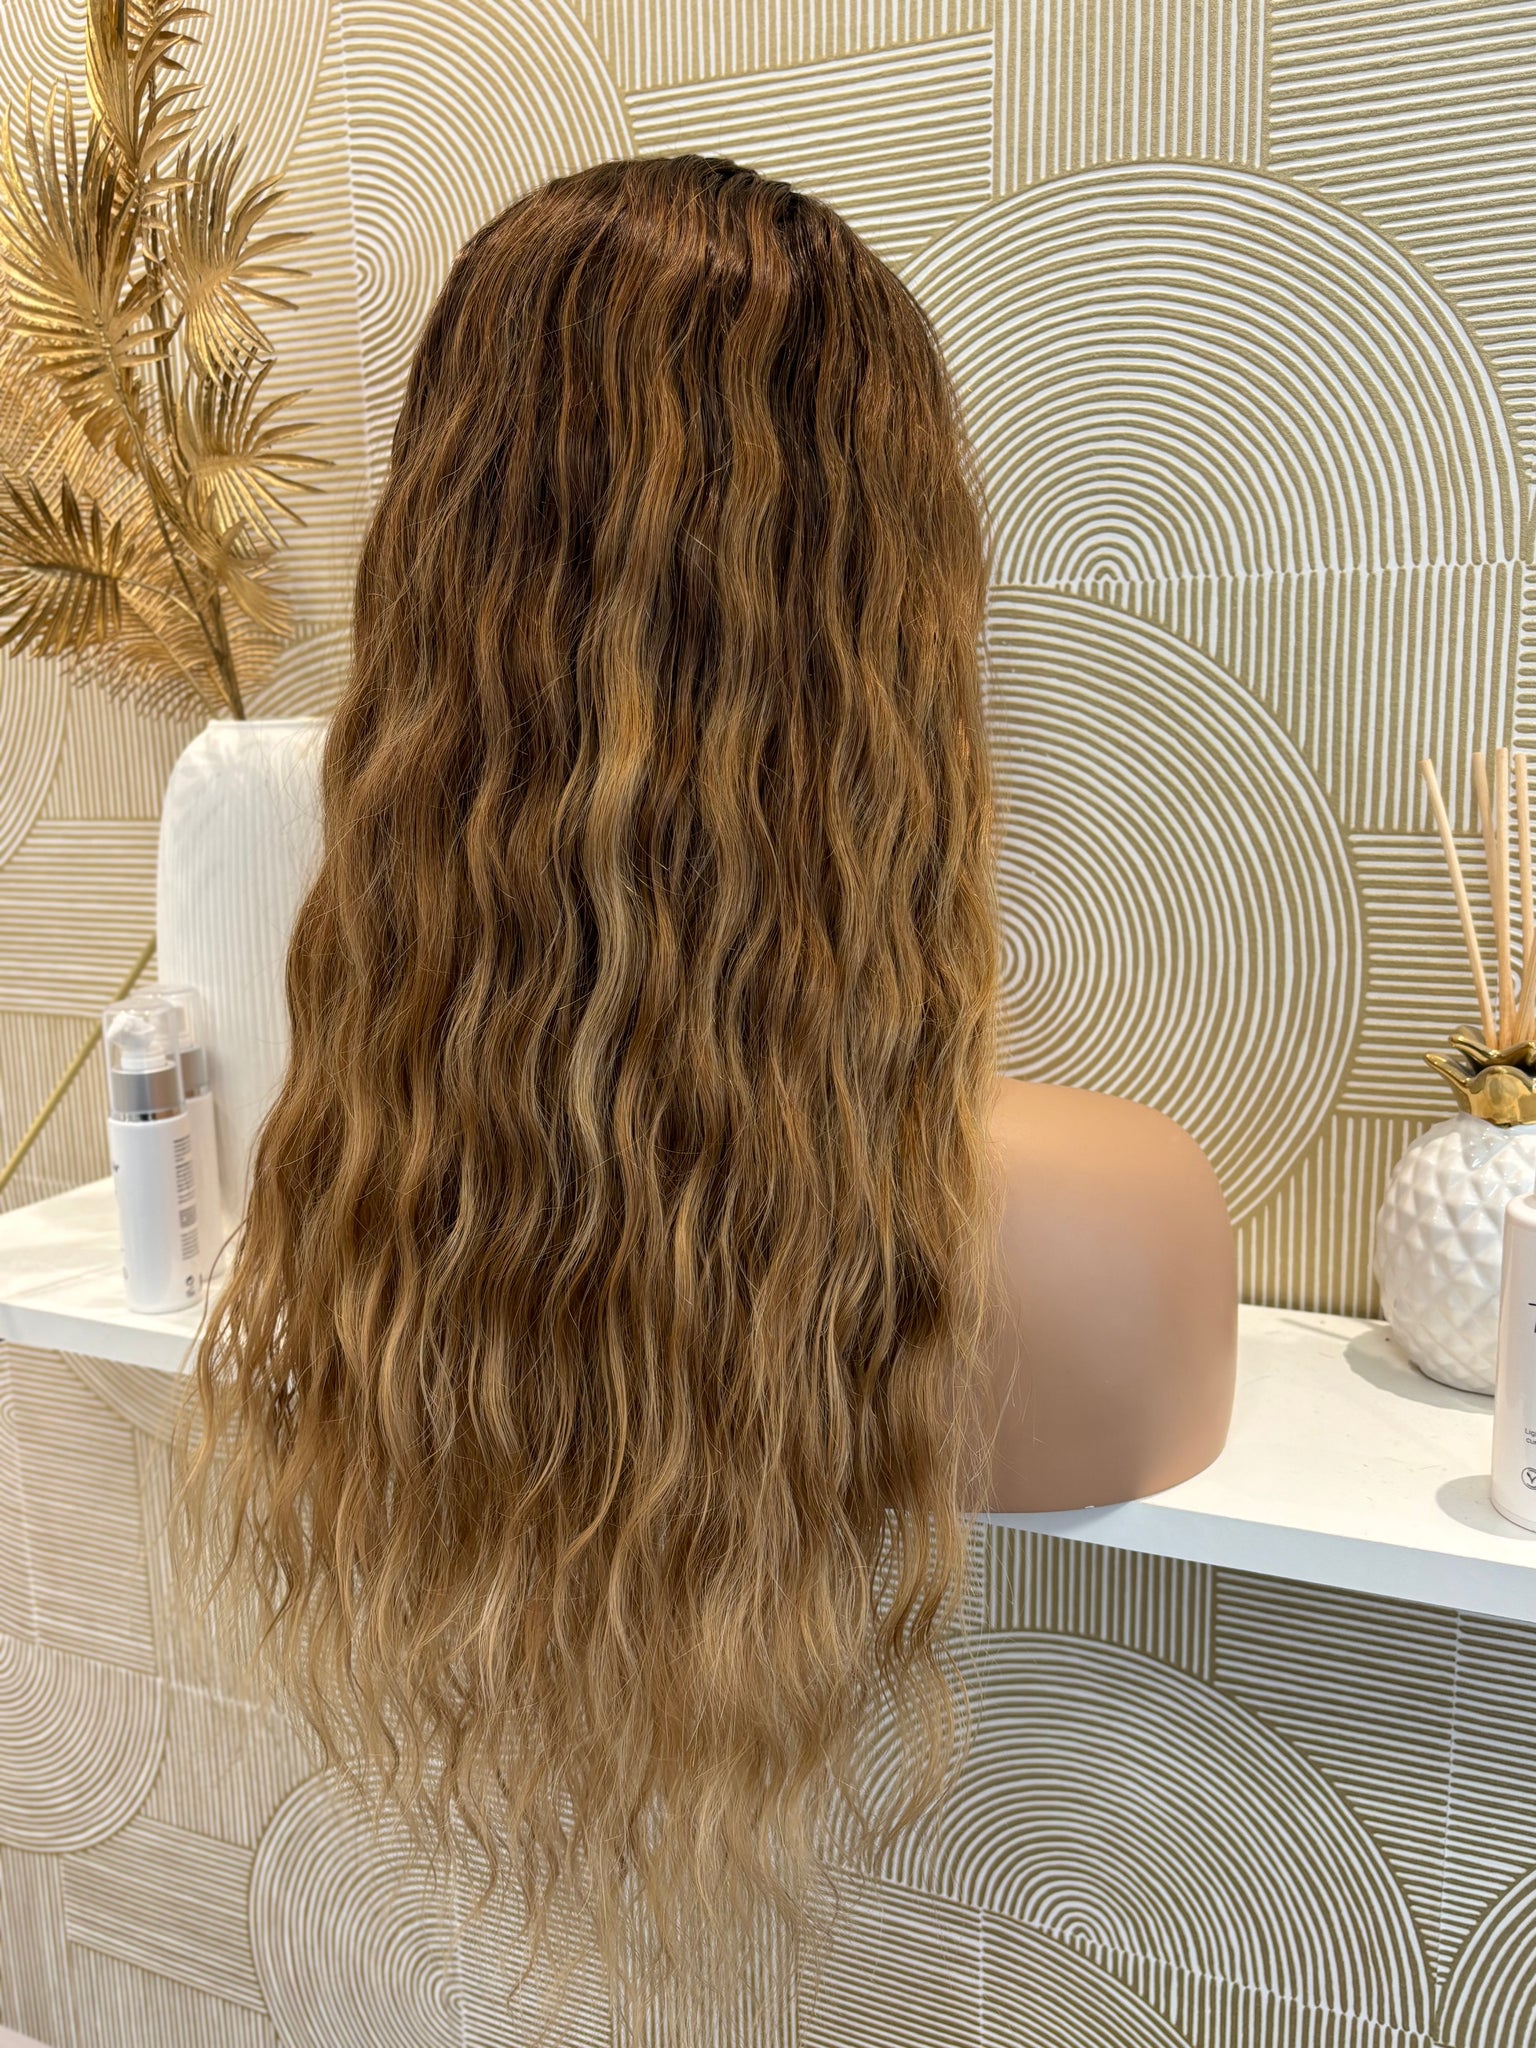 Tania - Integral + lace top  / 22 inch / 150 % Volume / European hair natural wavy